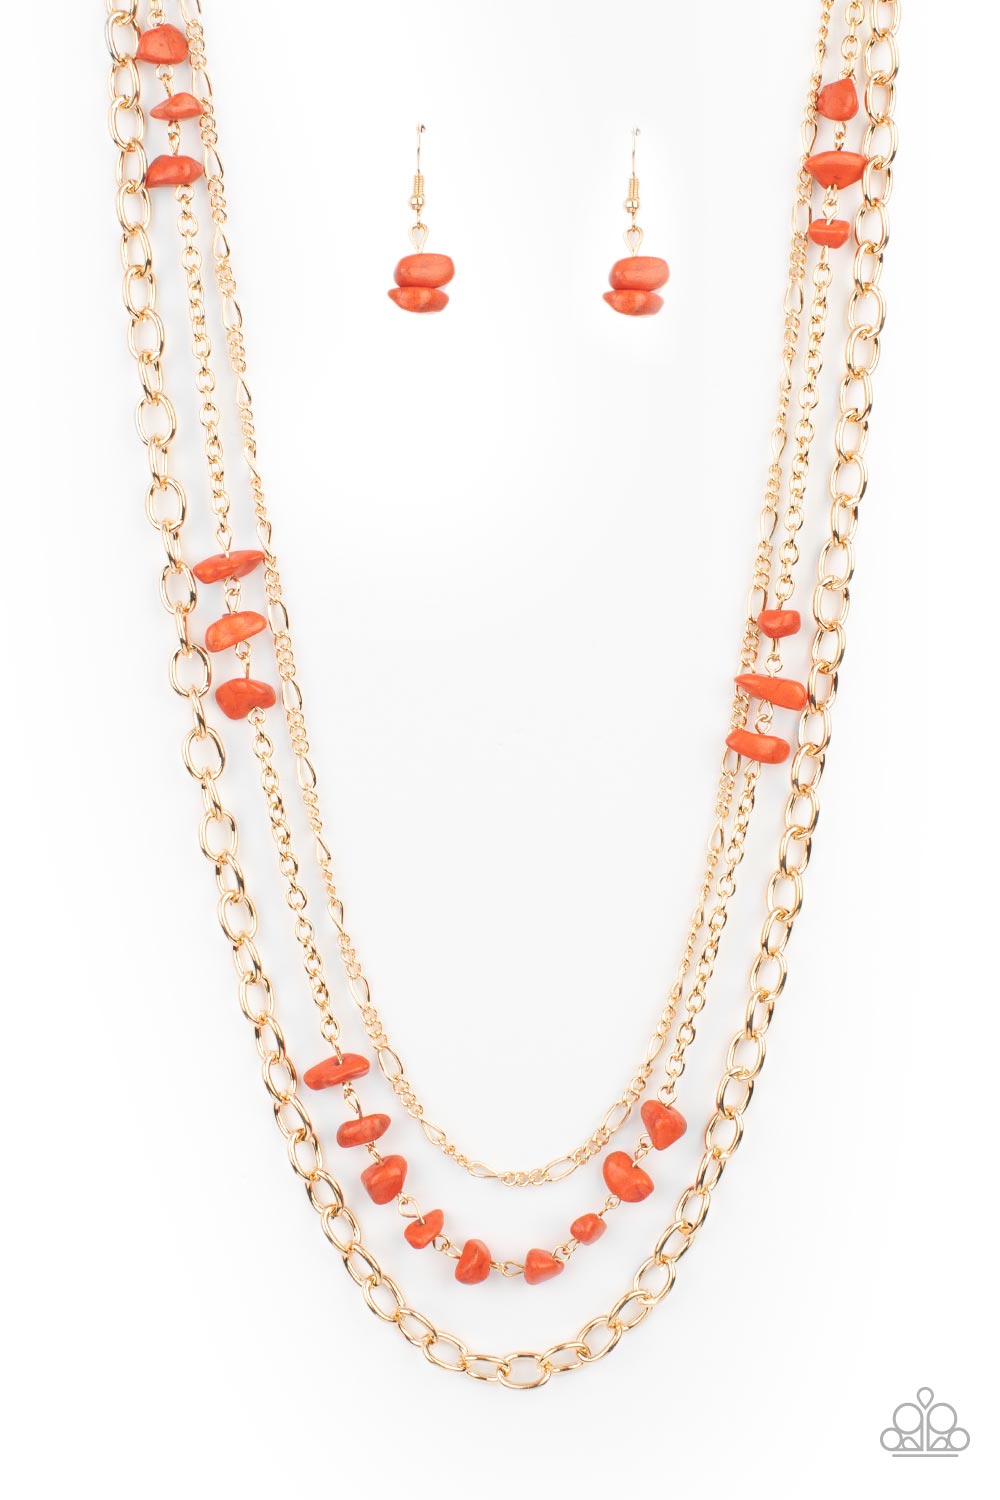 Artisanal Abundance Bedazzle Accessories - Orange Fashion Boutique Mobile Necklace Paparazzi Me Pretty - –